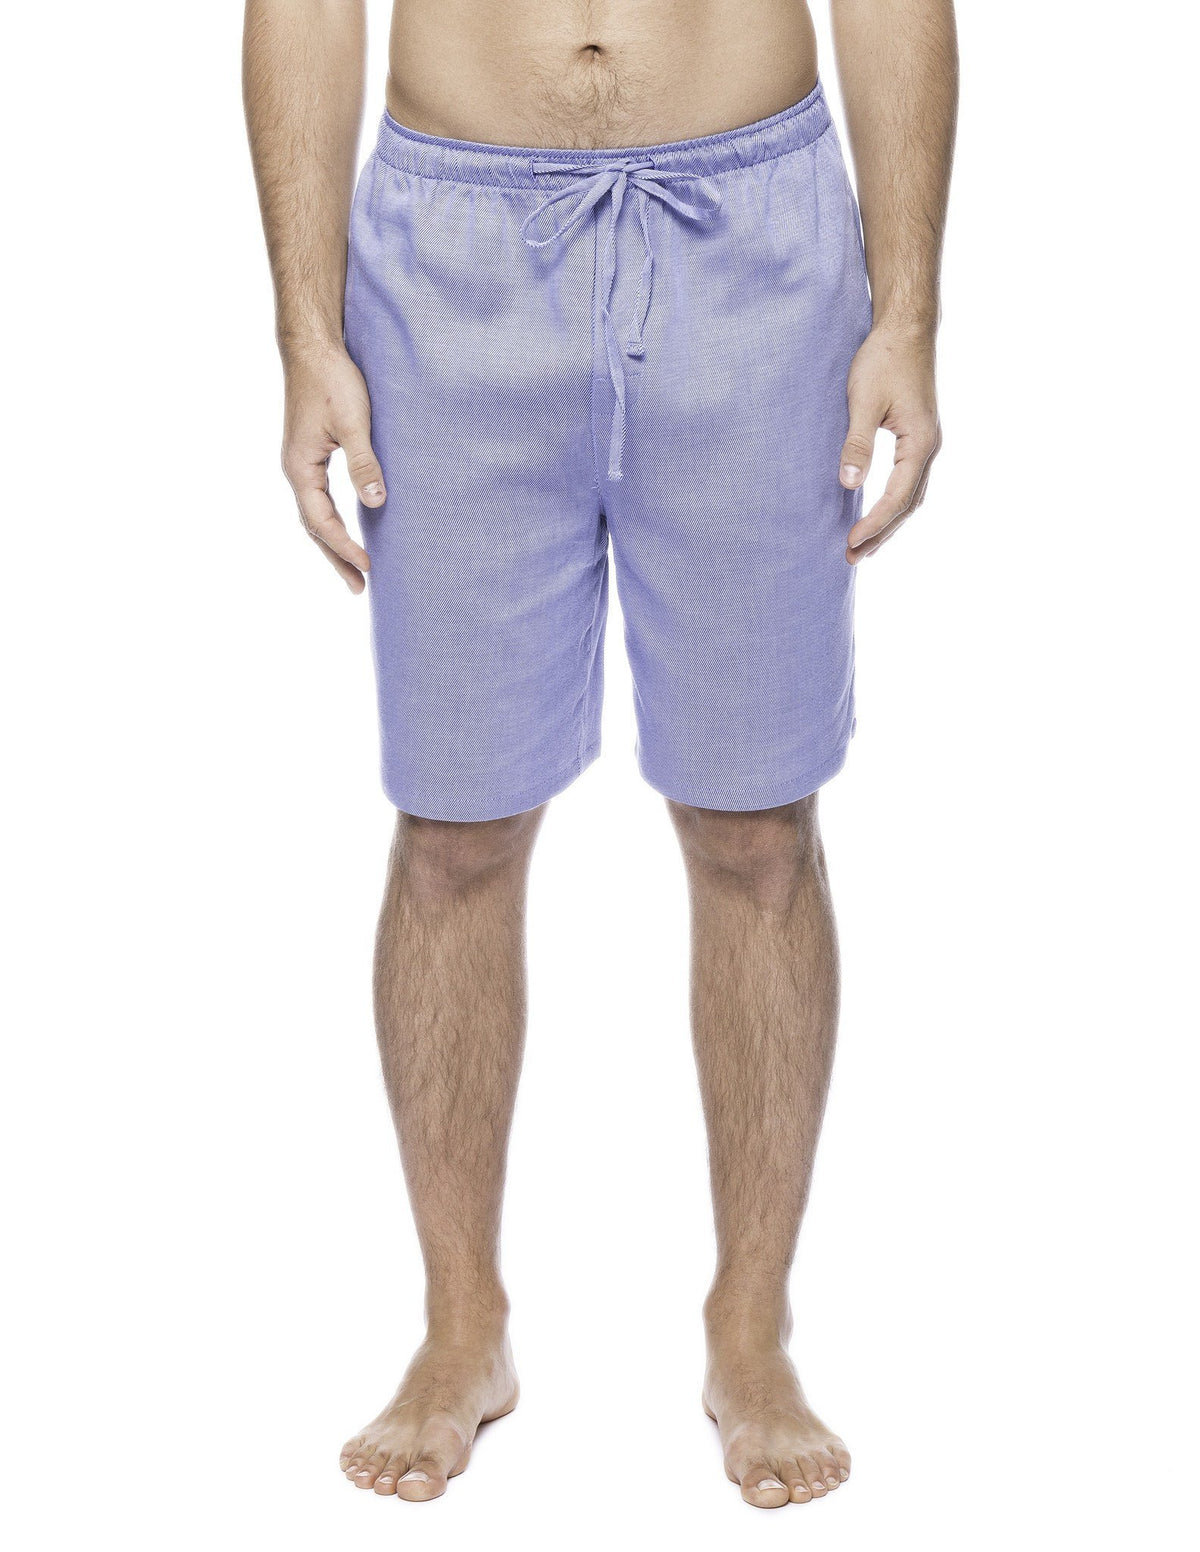 Men's 100% Woven Cotton Lounge Shorts - Blue Twill